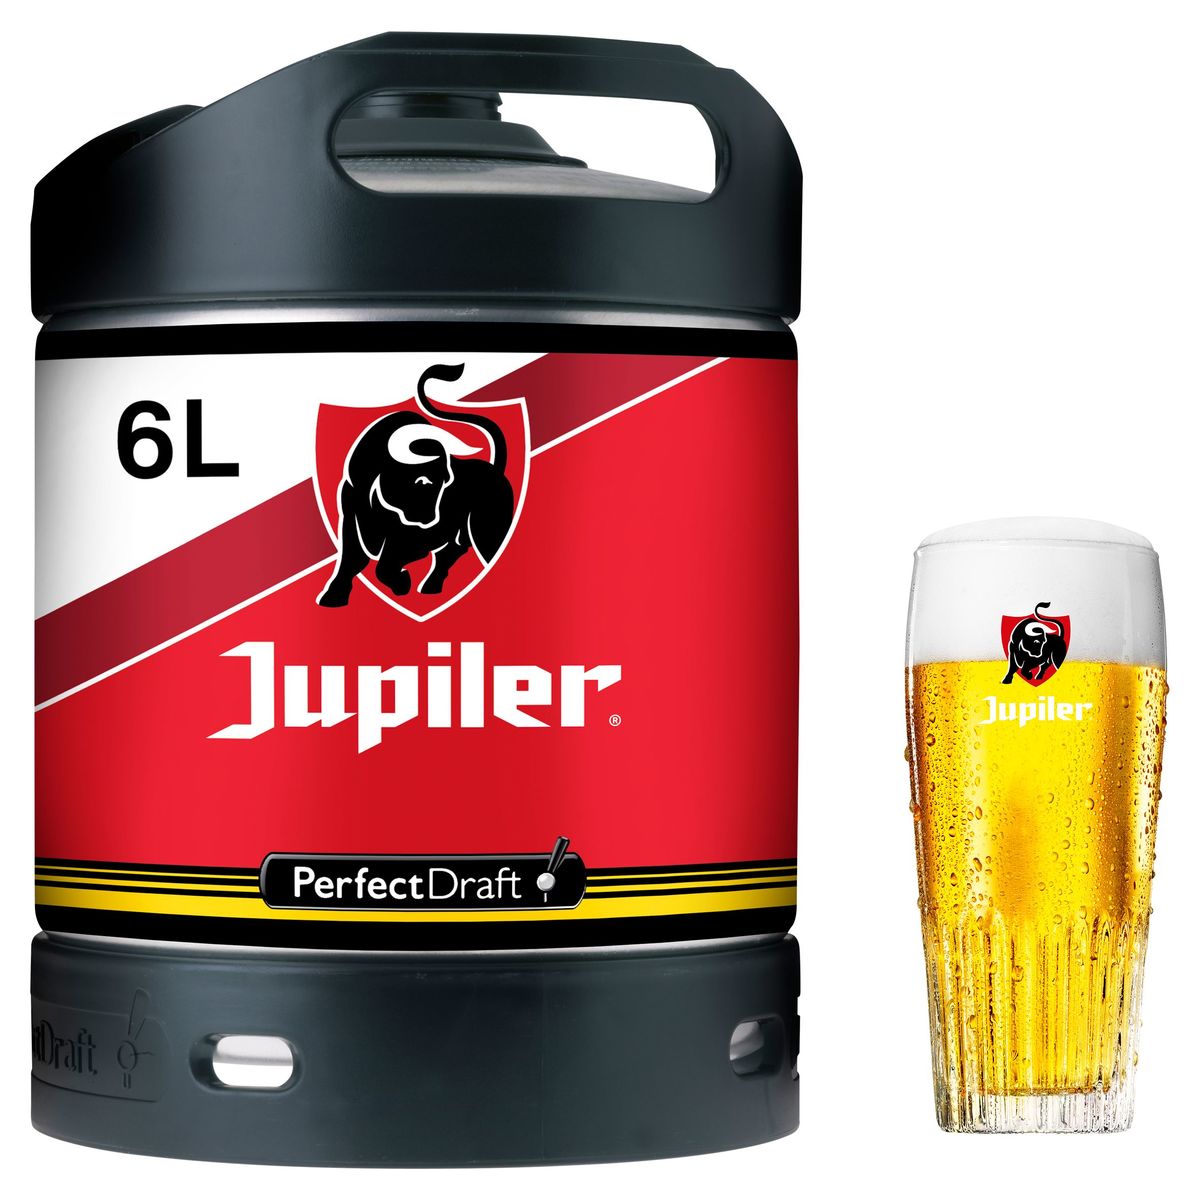 Jupiler Blond Bier Pils 5.2% Alc 6L PerfectDraft vat